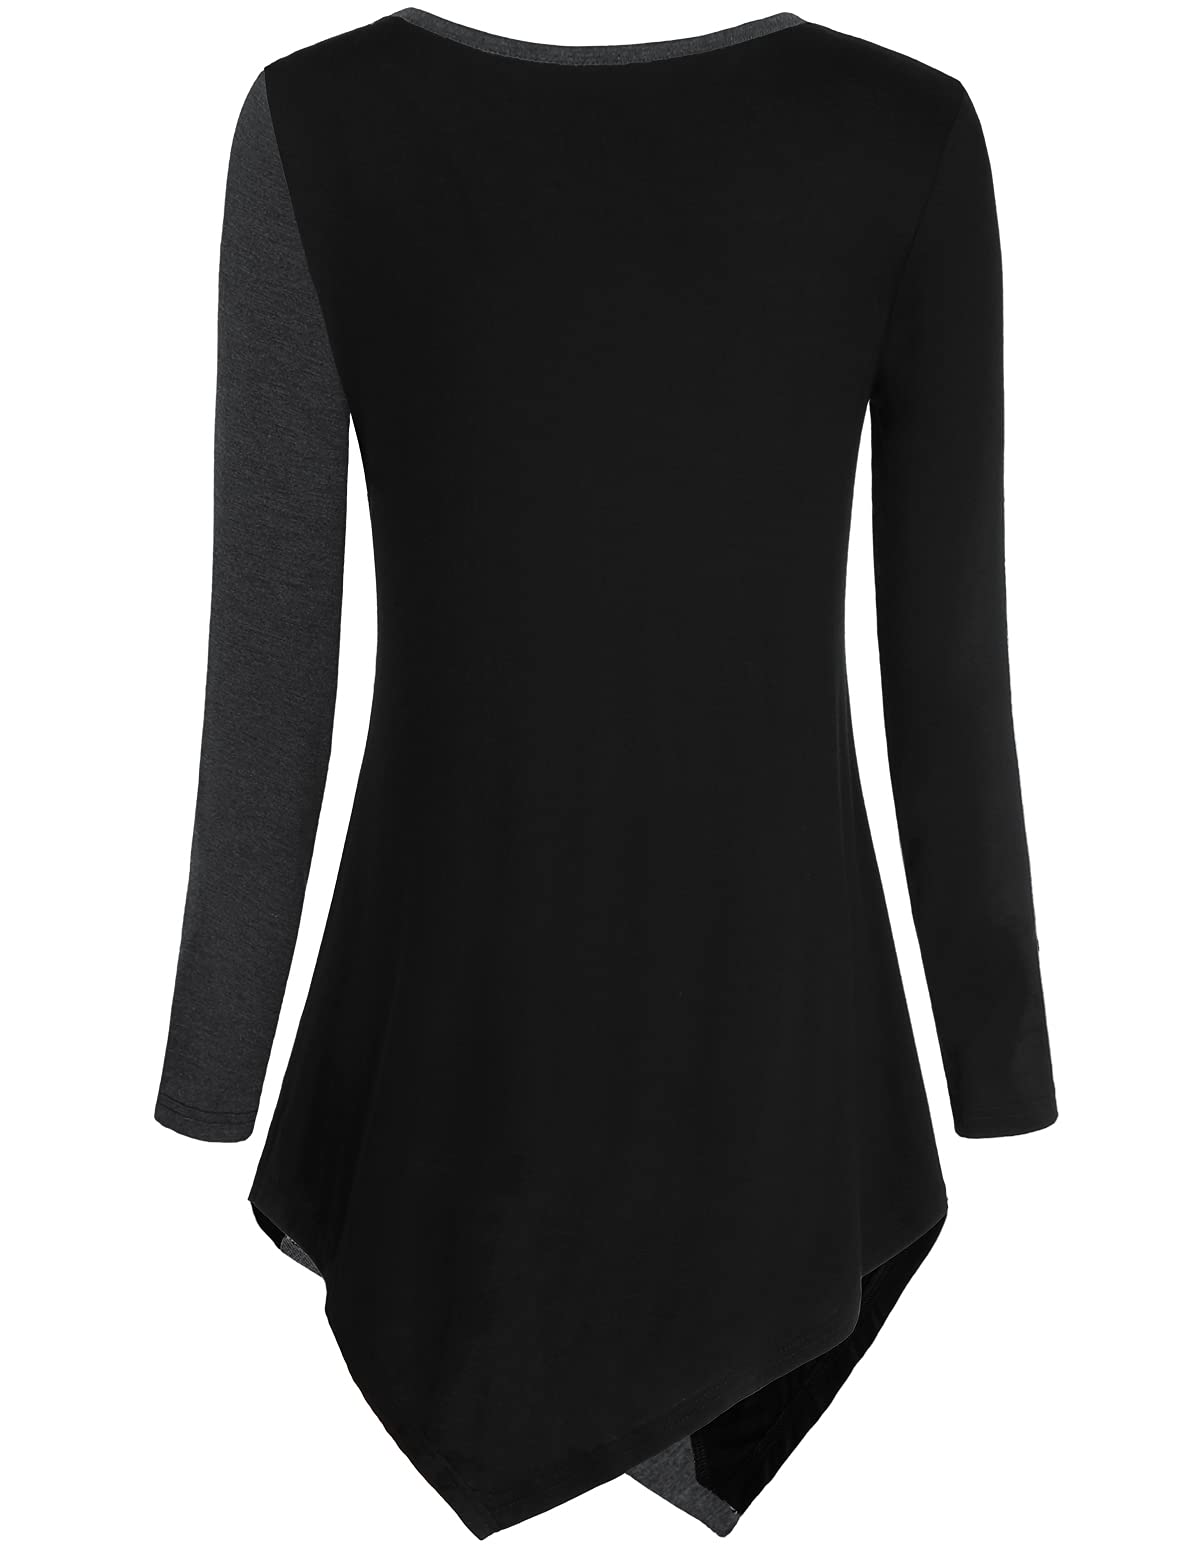 DJT Long Sleeve Black And Dark Grey Women's Tunic Shirts Scoop Neck Hanky Hem Color Block Stretch Casual Fall T Shirt Tops